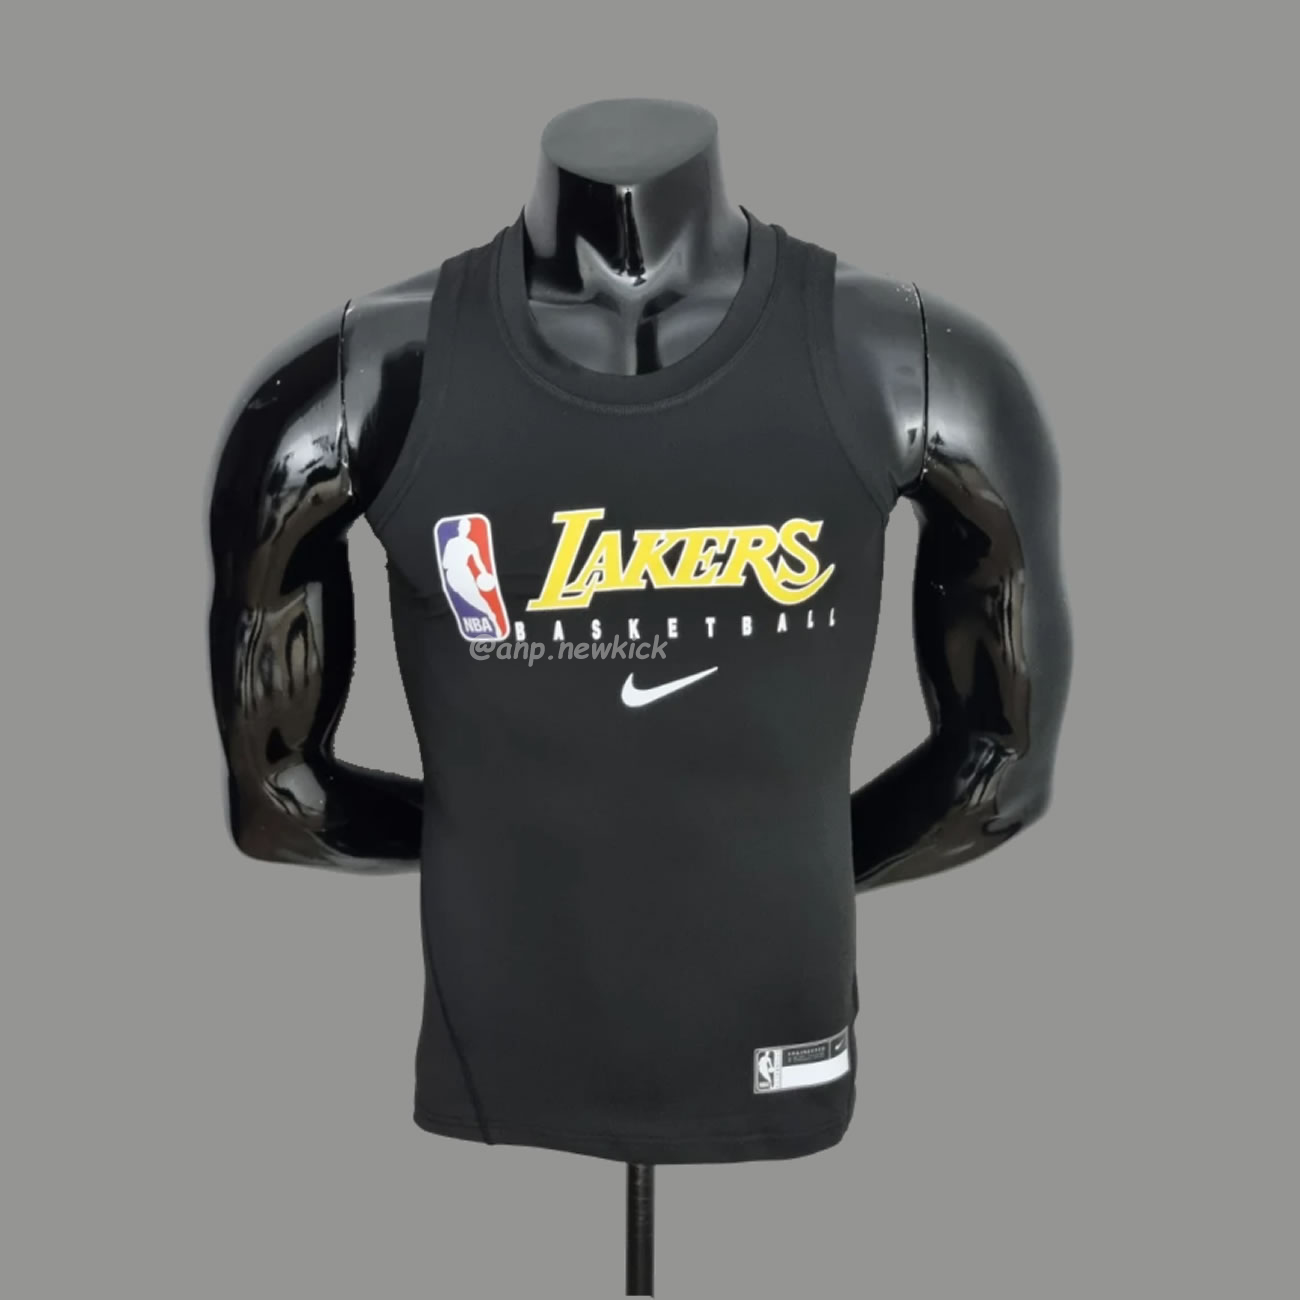 2022 Nba Jersey Lakers New Pattern Top Quality Cotton Sports Vest (4) - newkick.org